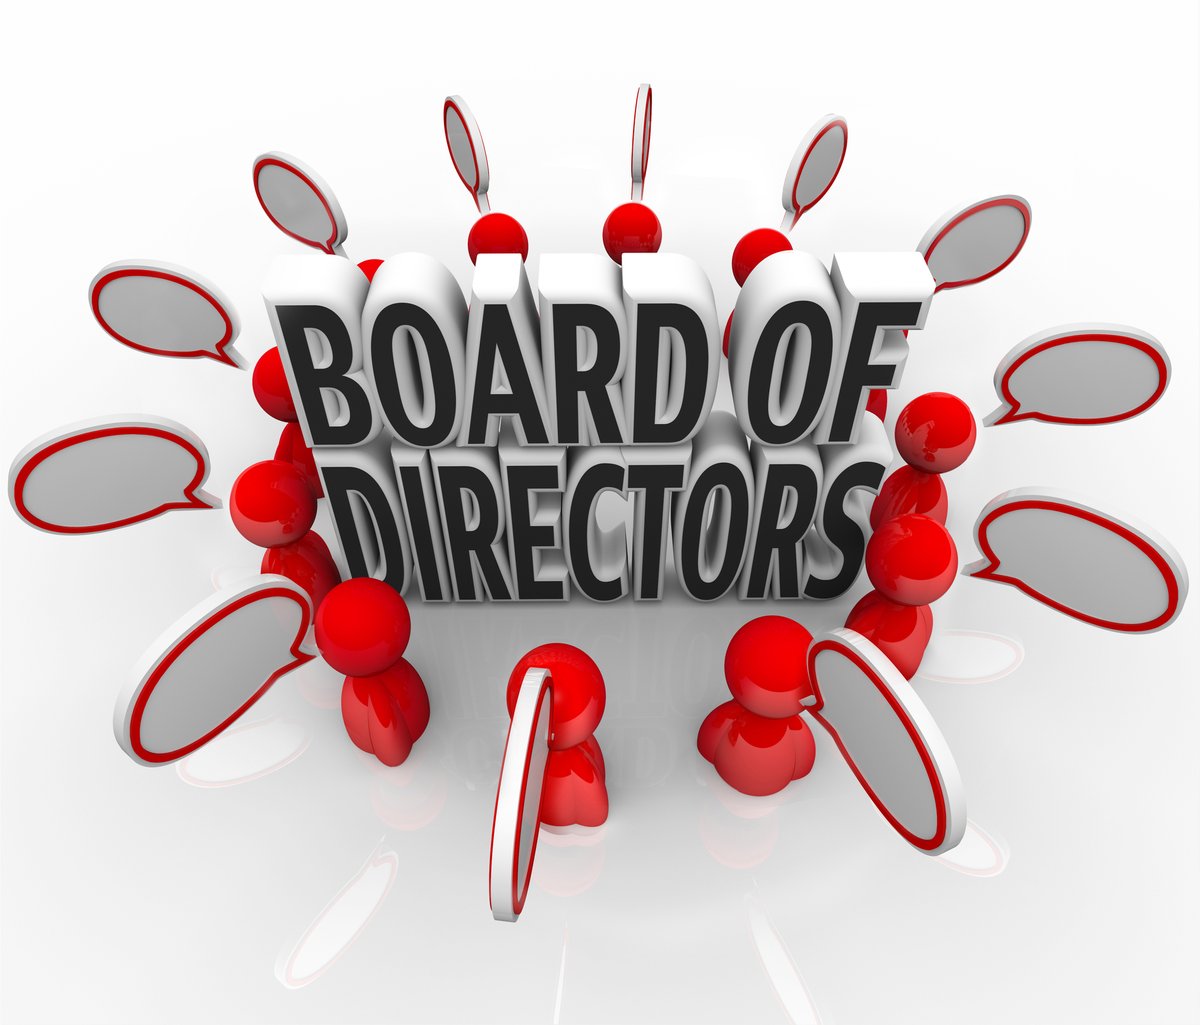 NANETS Board of Directors Nominations process closes on 5/10